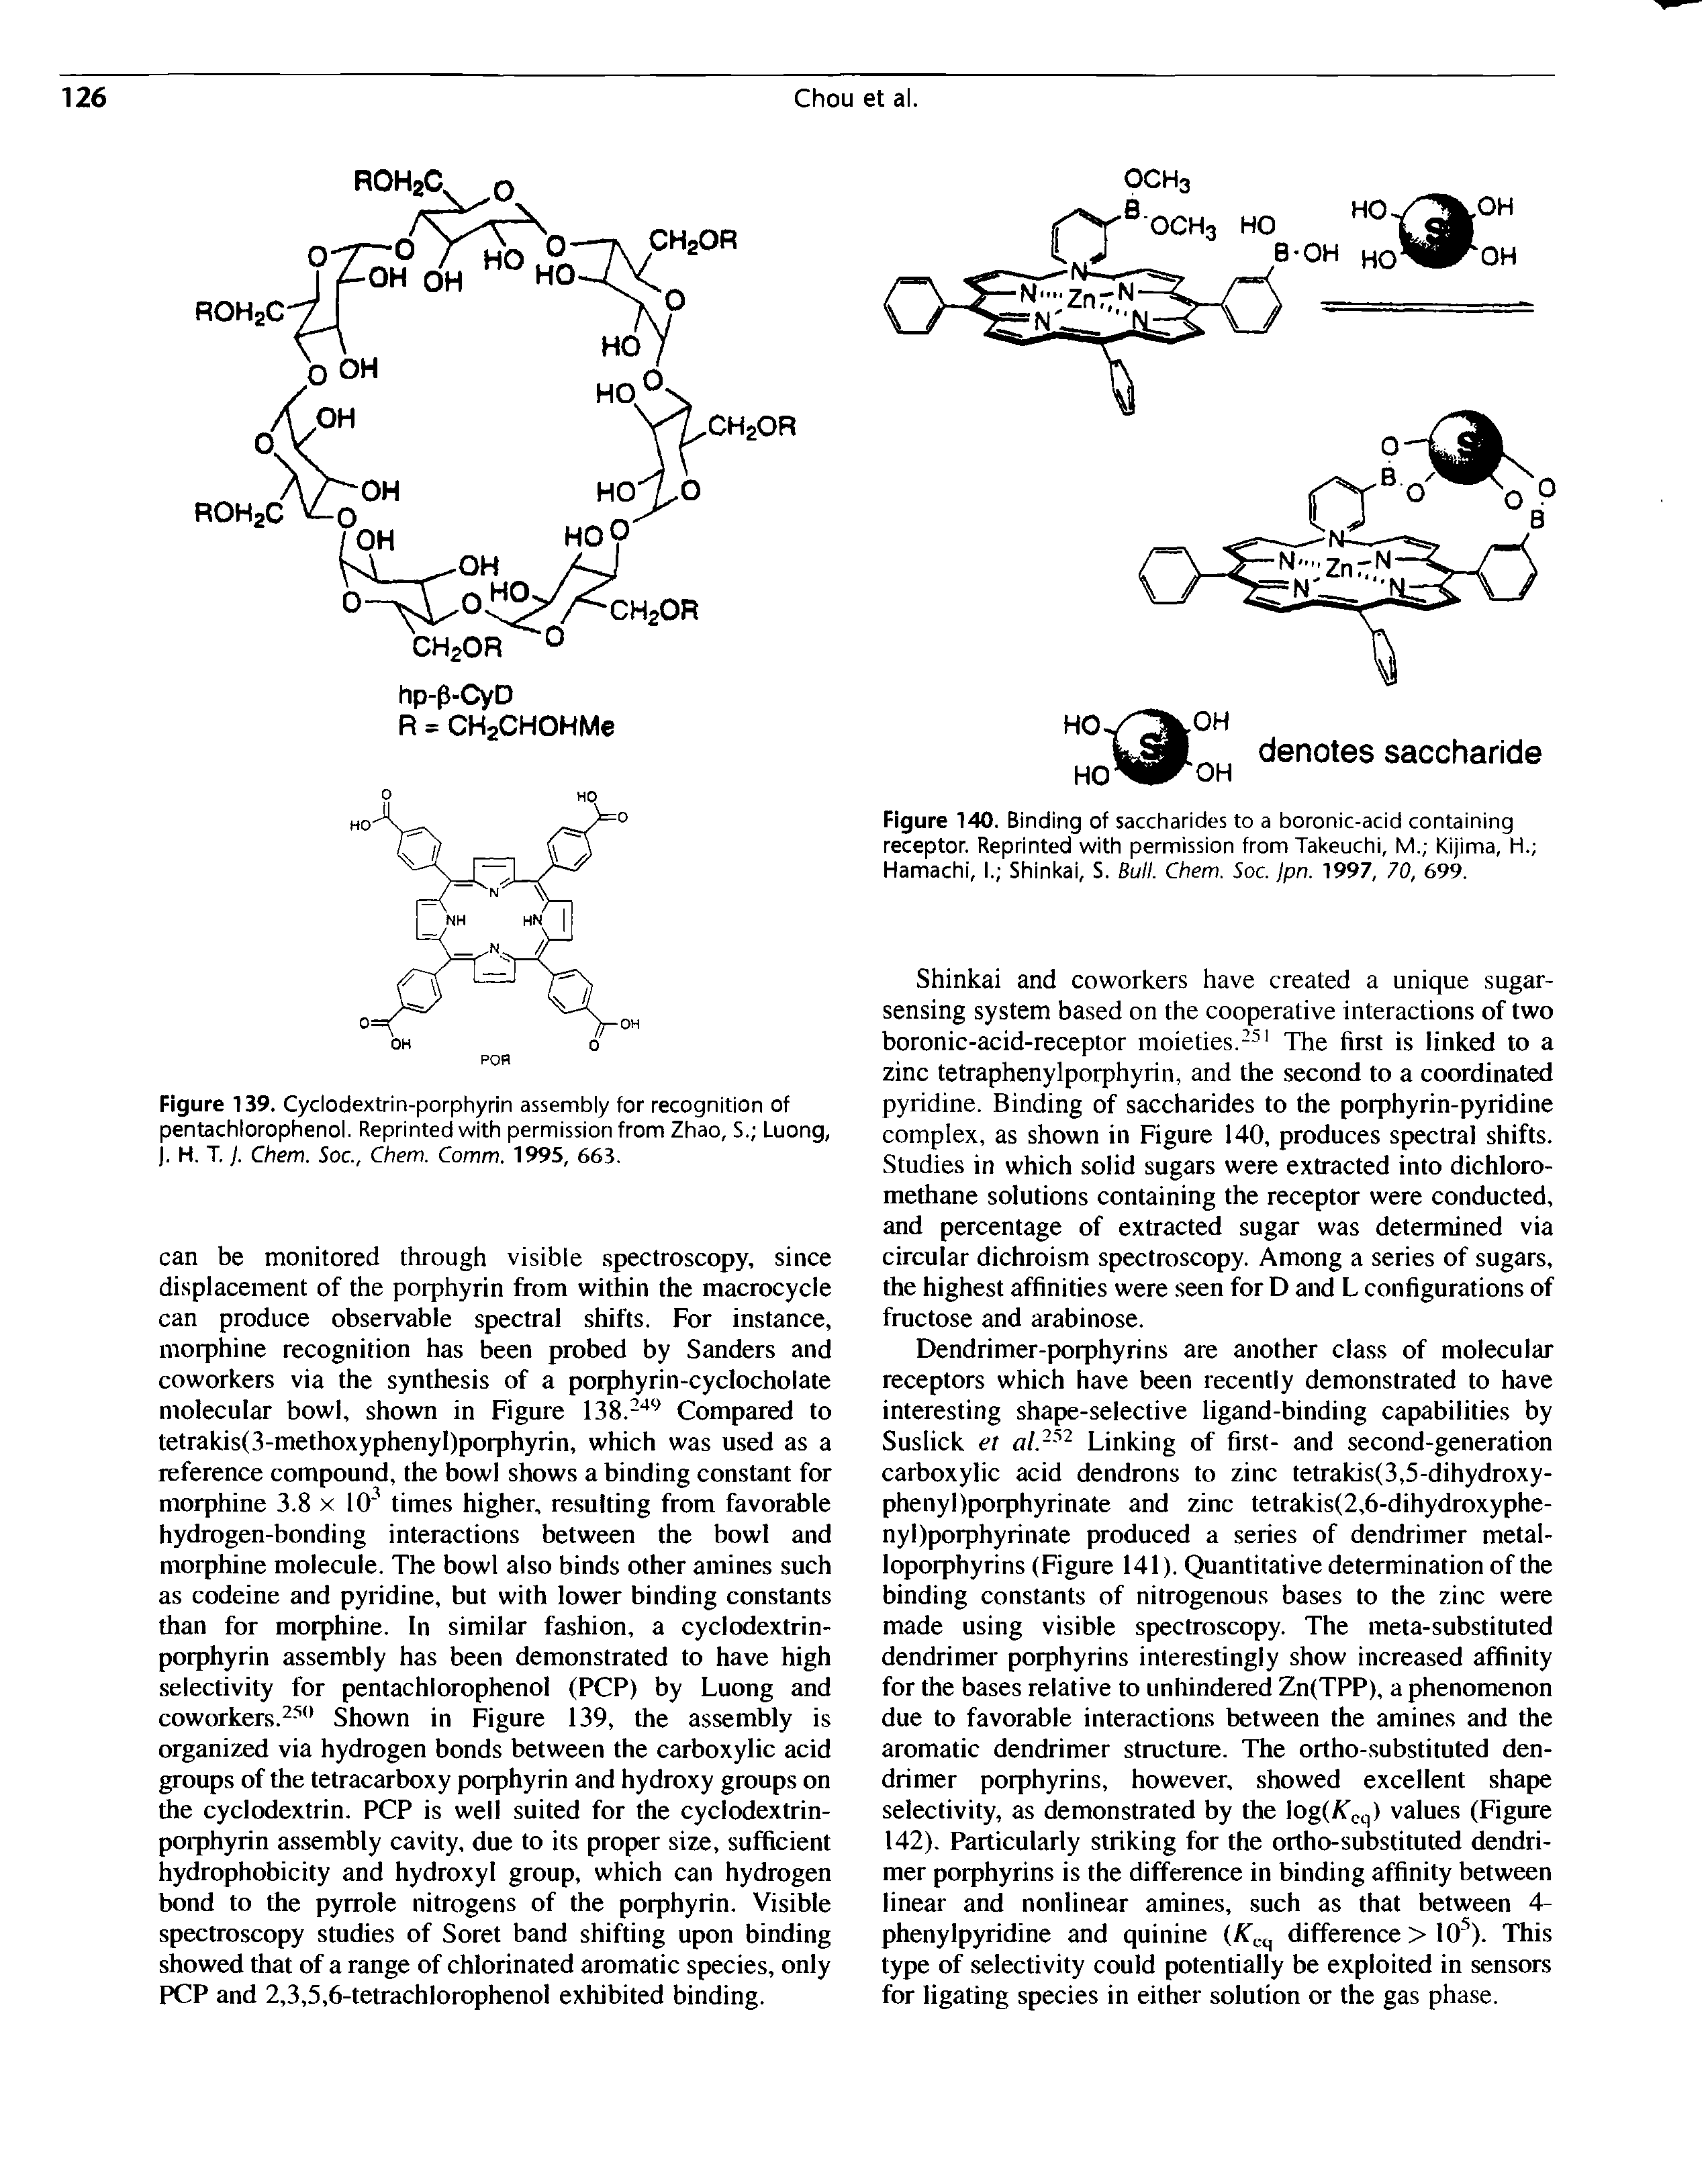 Figure 140. Binding of saccharides to a boronic-acid containing receptor. Reprinted with permission from Takeuchi, M. Kijima, H. Hamachi, I. Shinkai, S. Bull. Chem. Soc. Ipn. 1997, 70, 699.